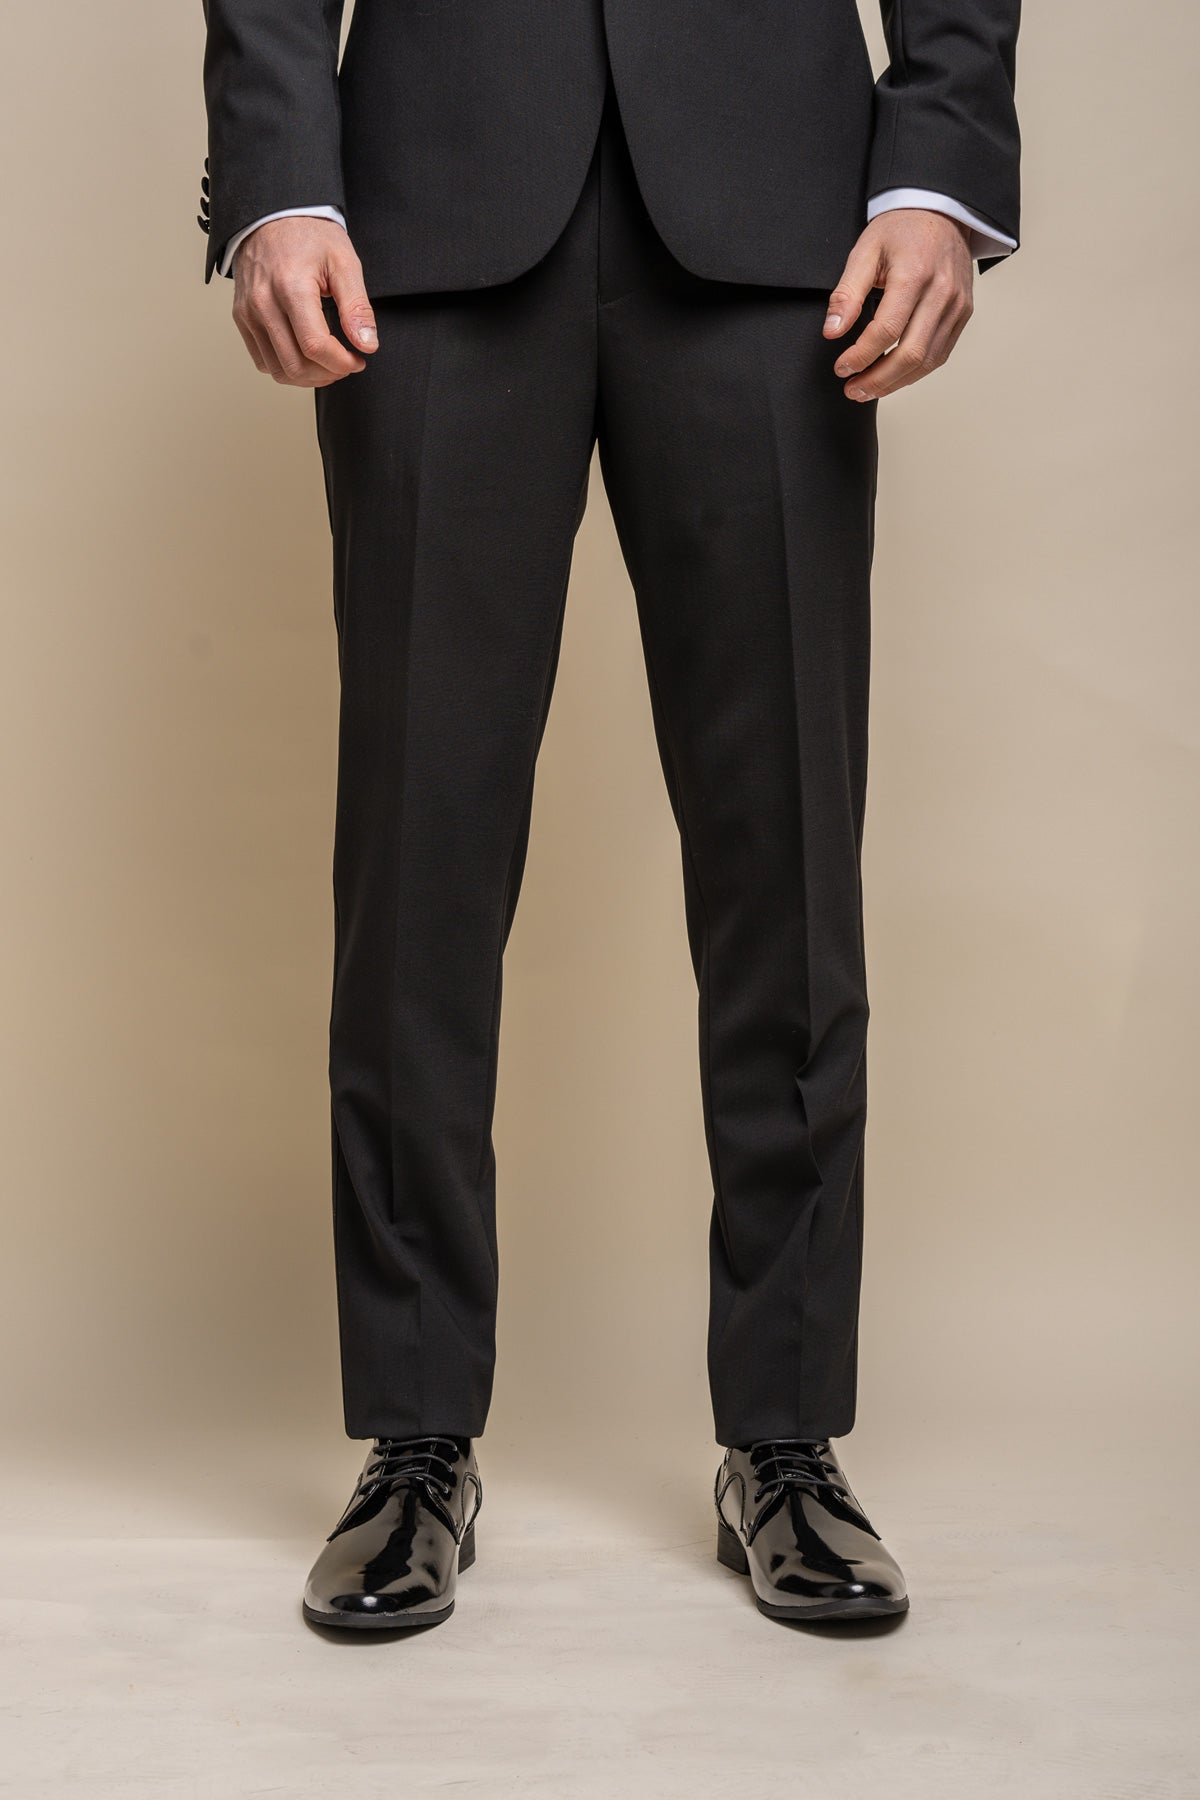 Aspen Black Tuxedo Trousers - Trousers - 28R - Swagger & Swoon